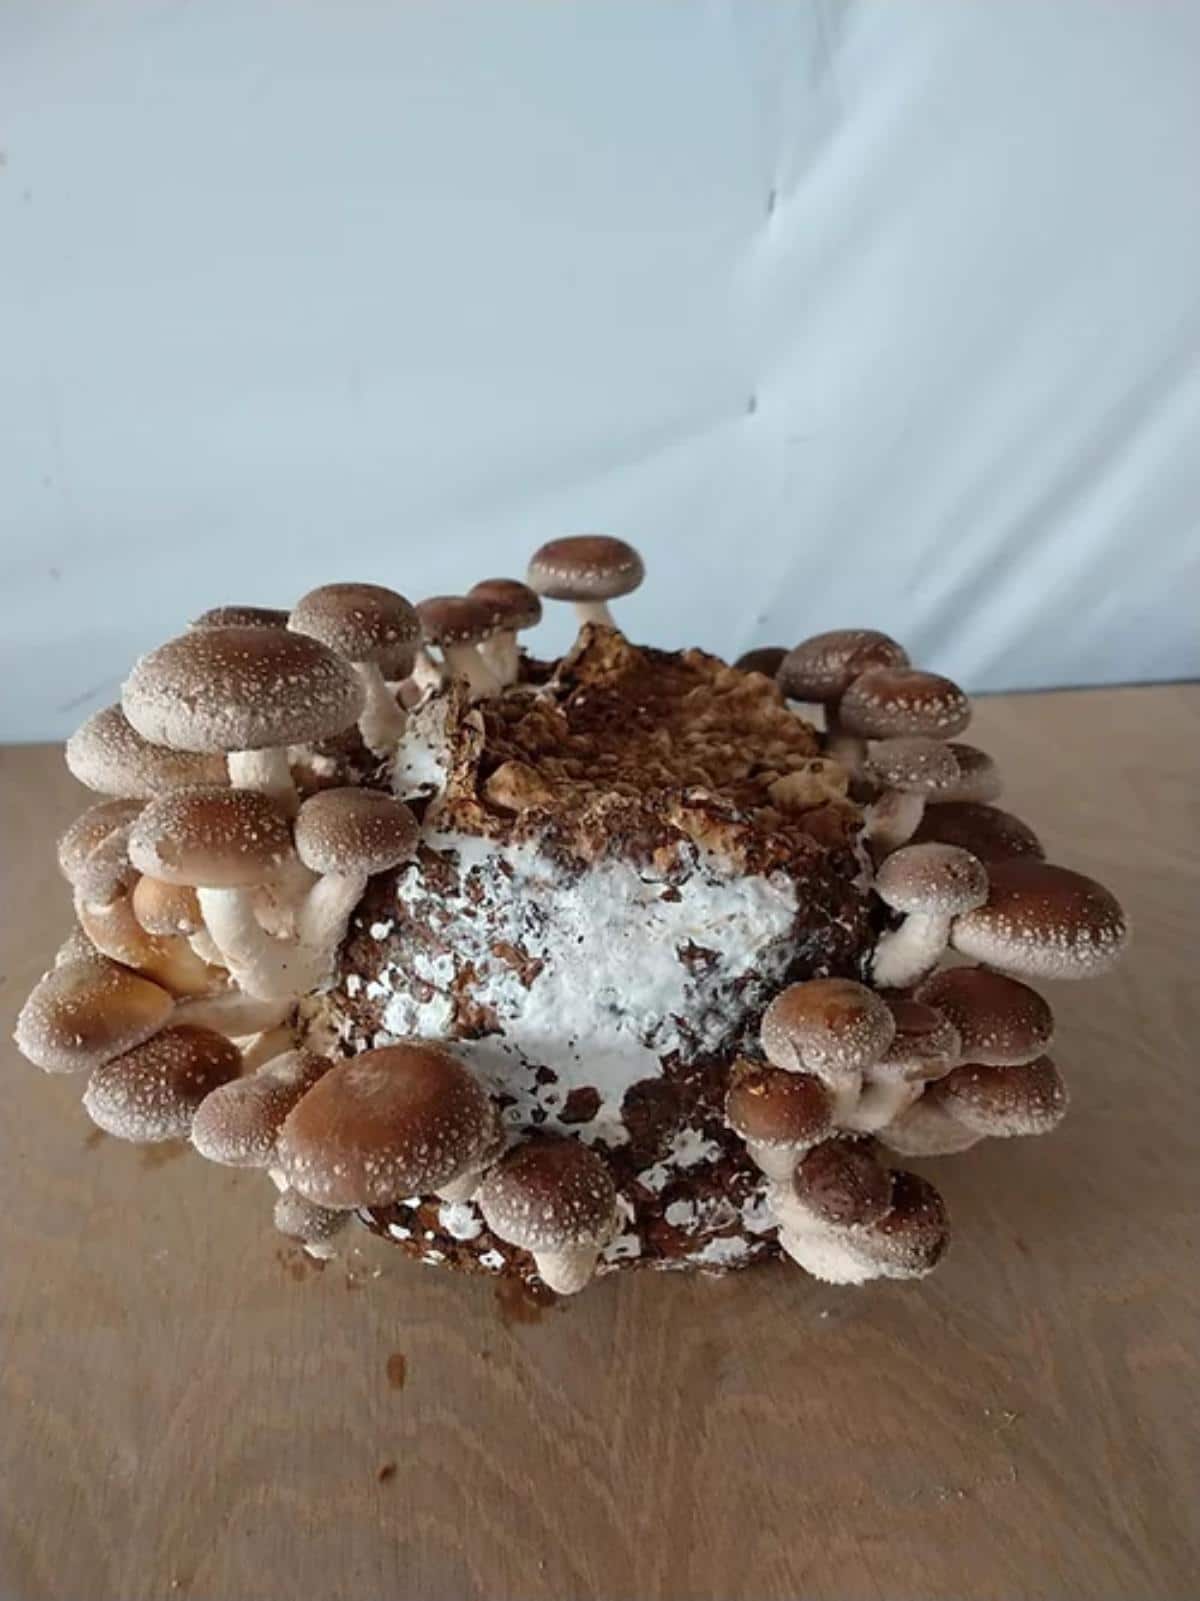 Trailbridge Farm Shiitake mushroom kit